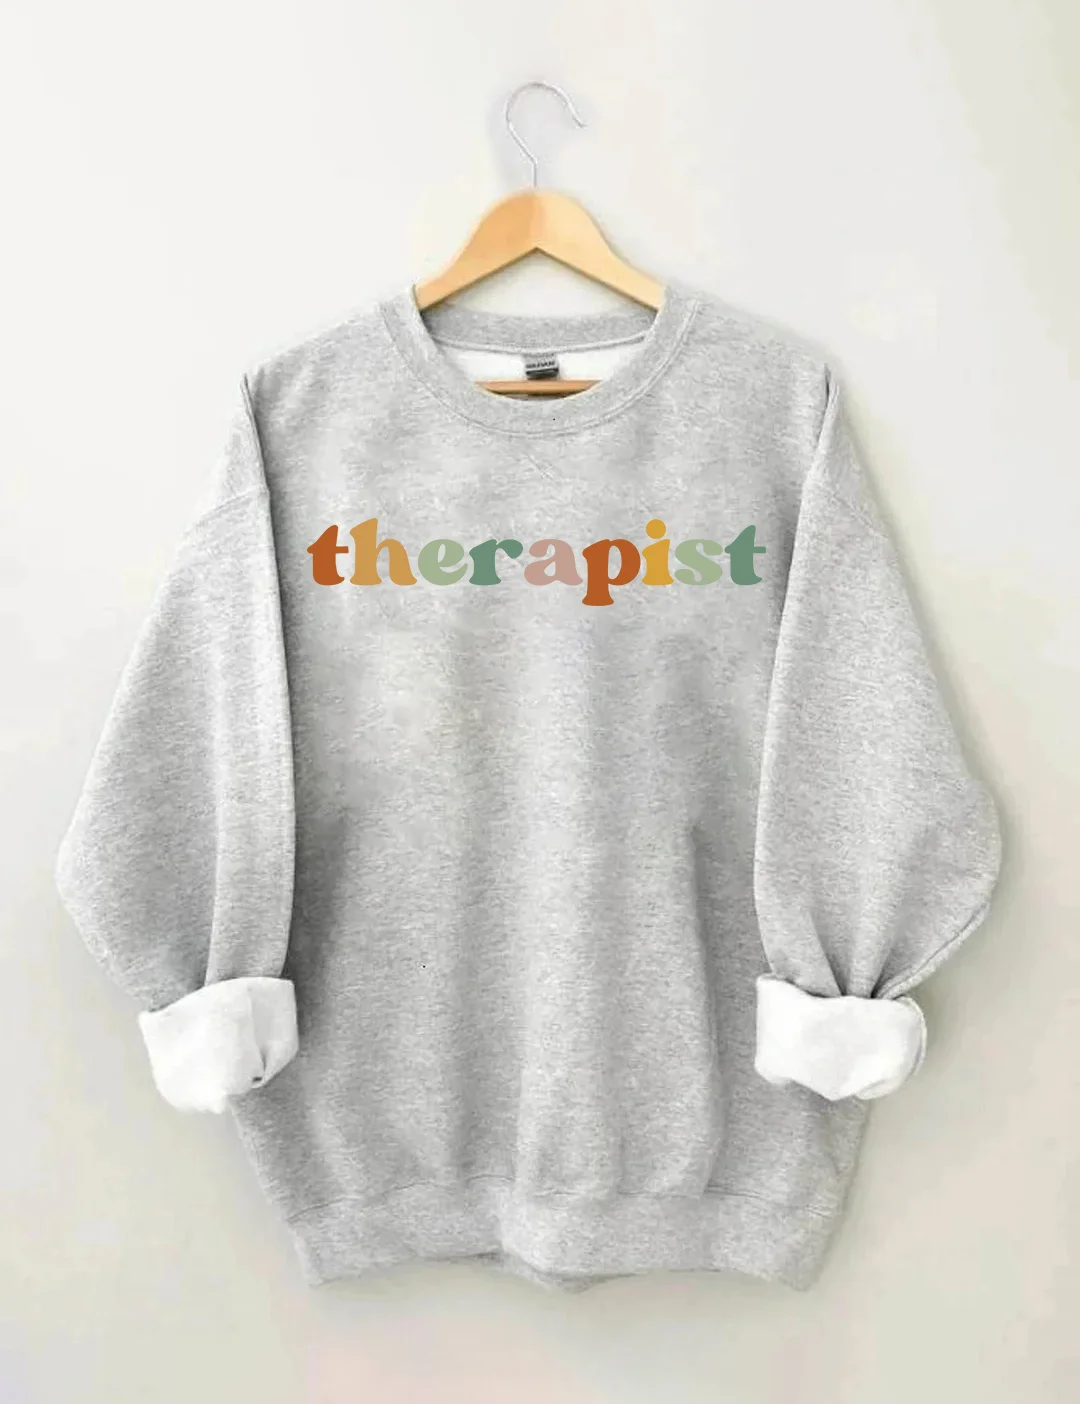 Therapist Sweatshirt